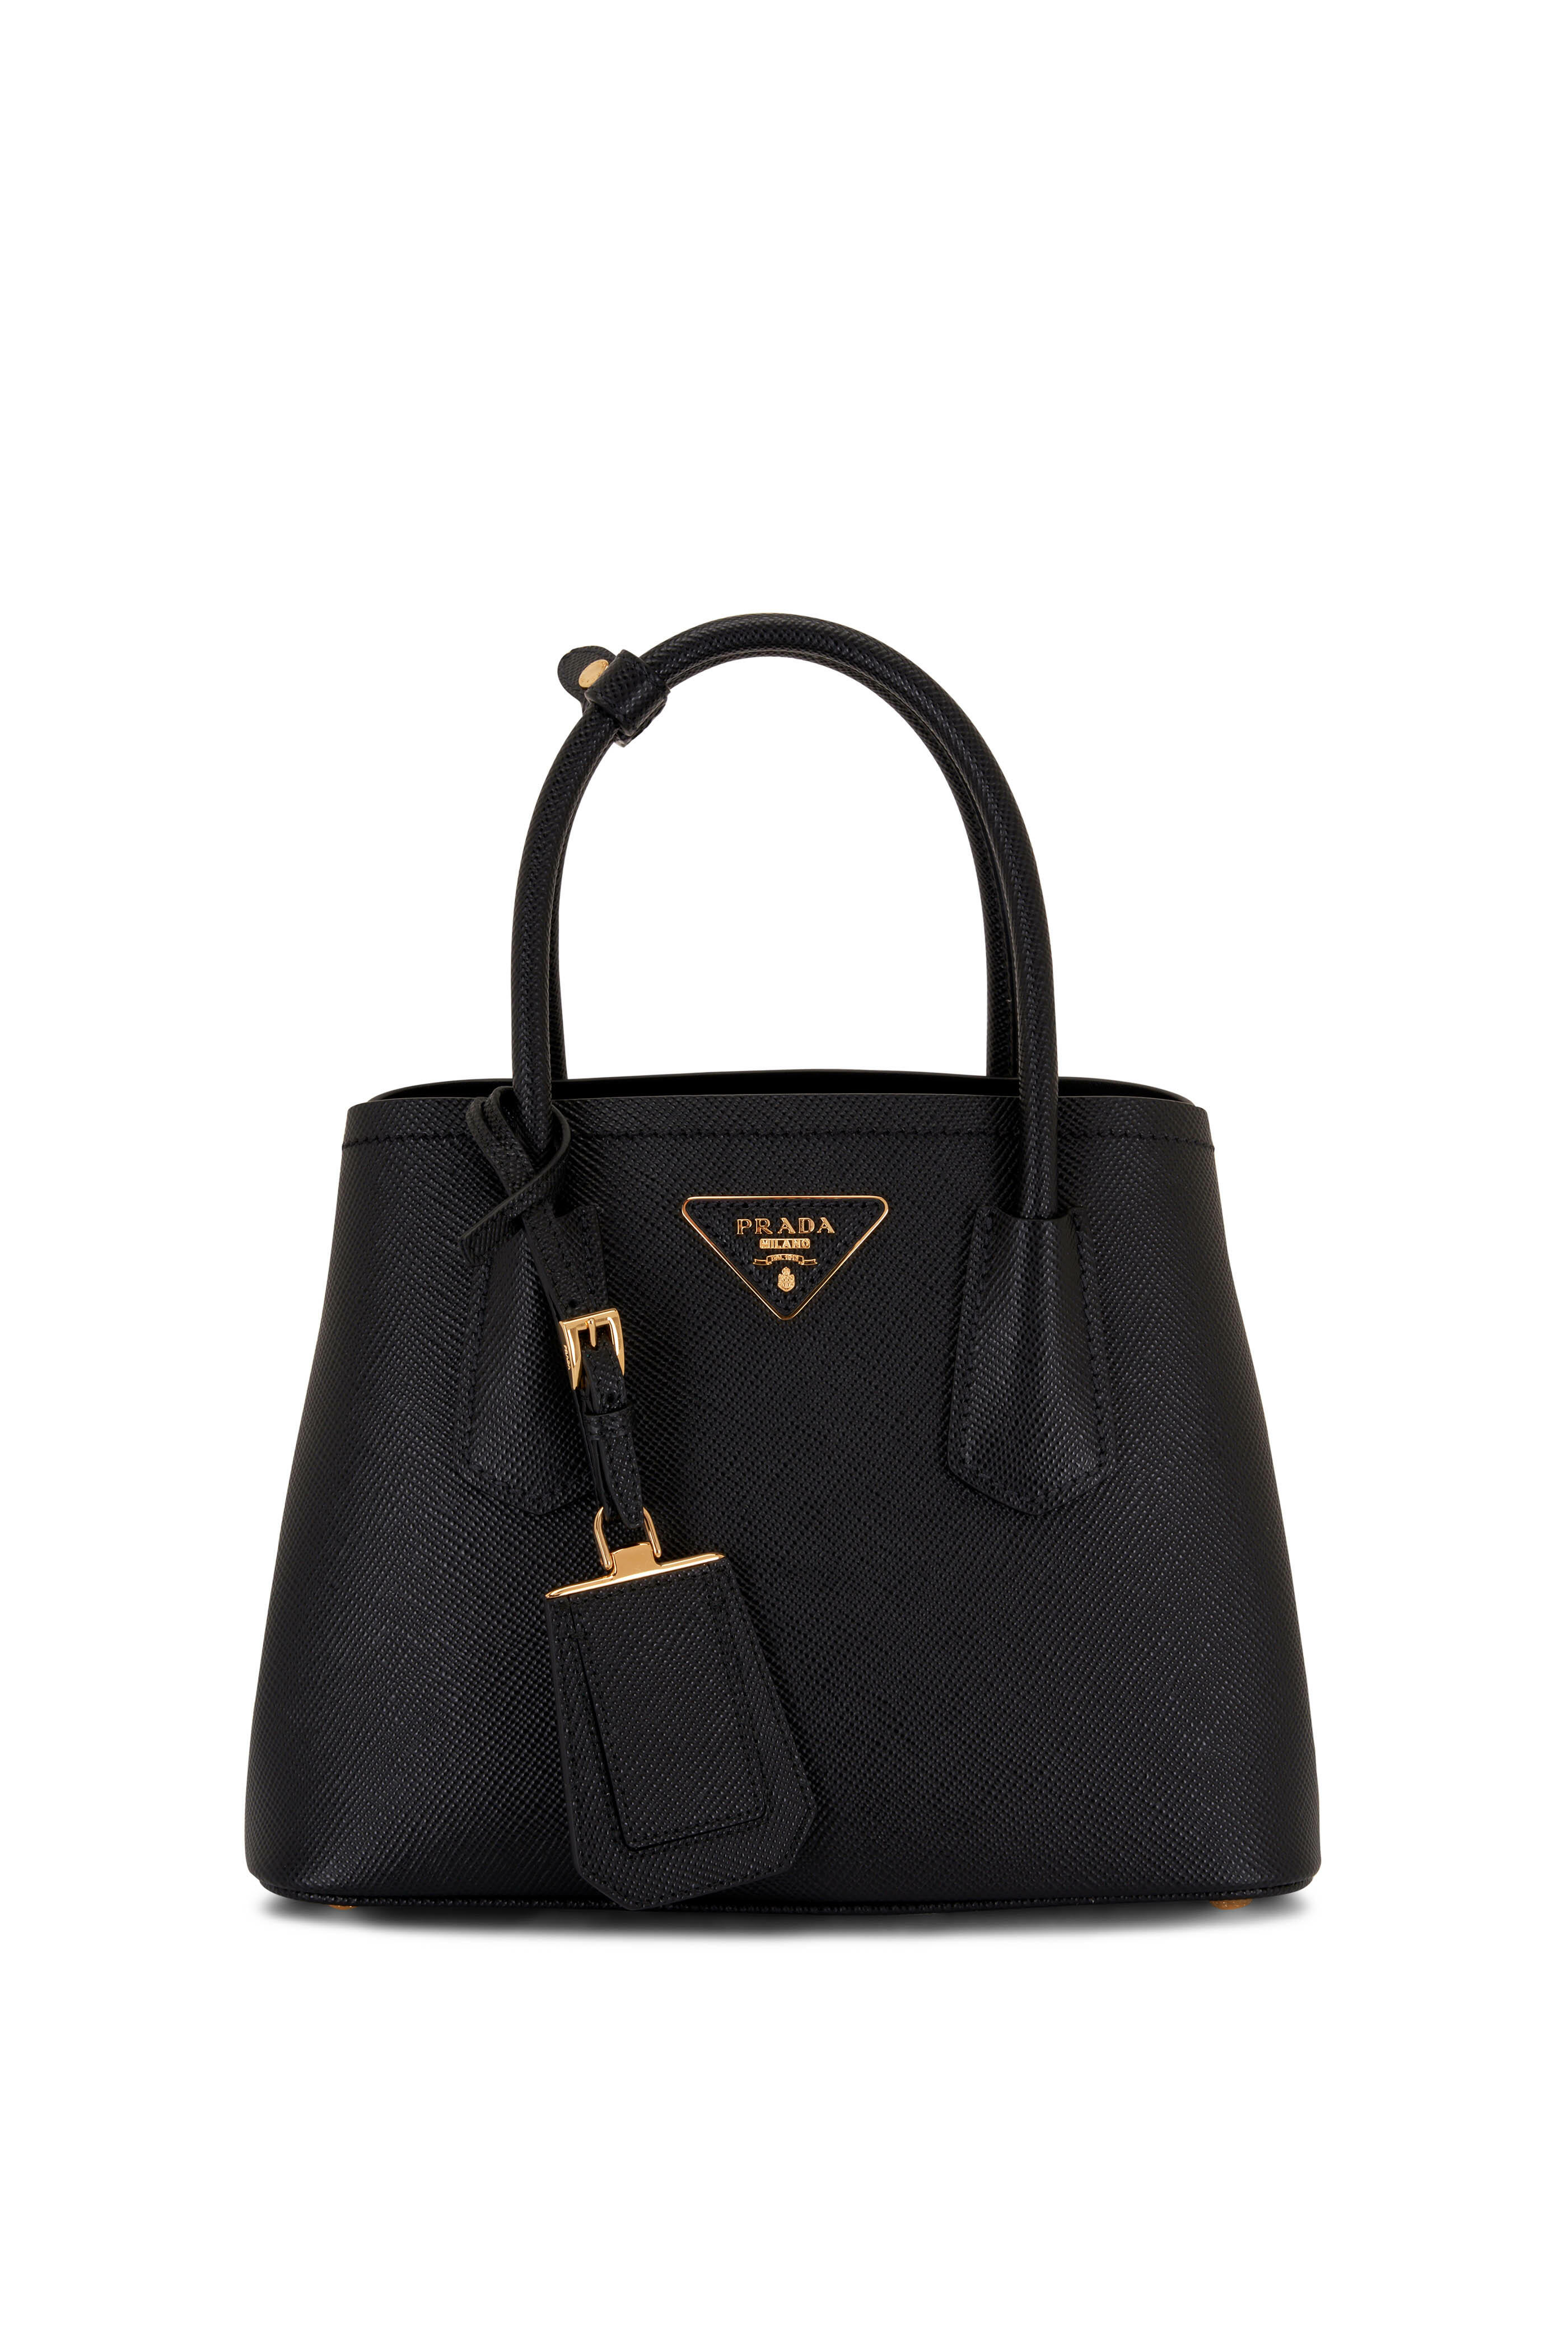 Prada Black Saffiano Leather Mini Bag with Gold Hardware RRP